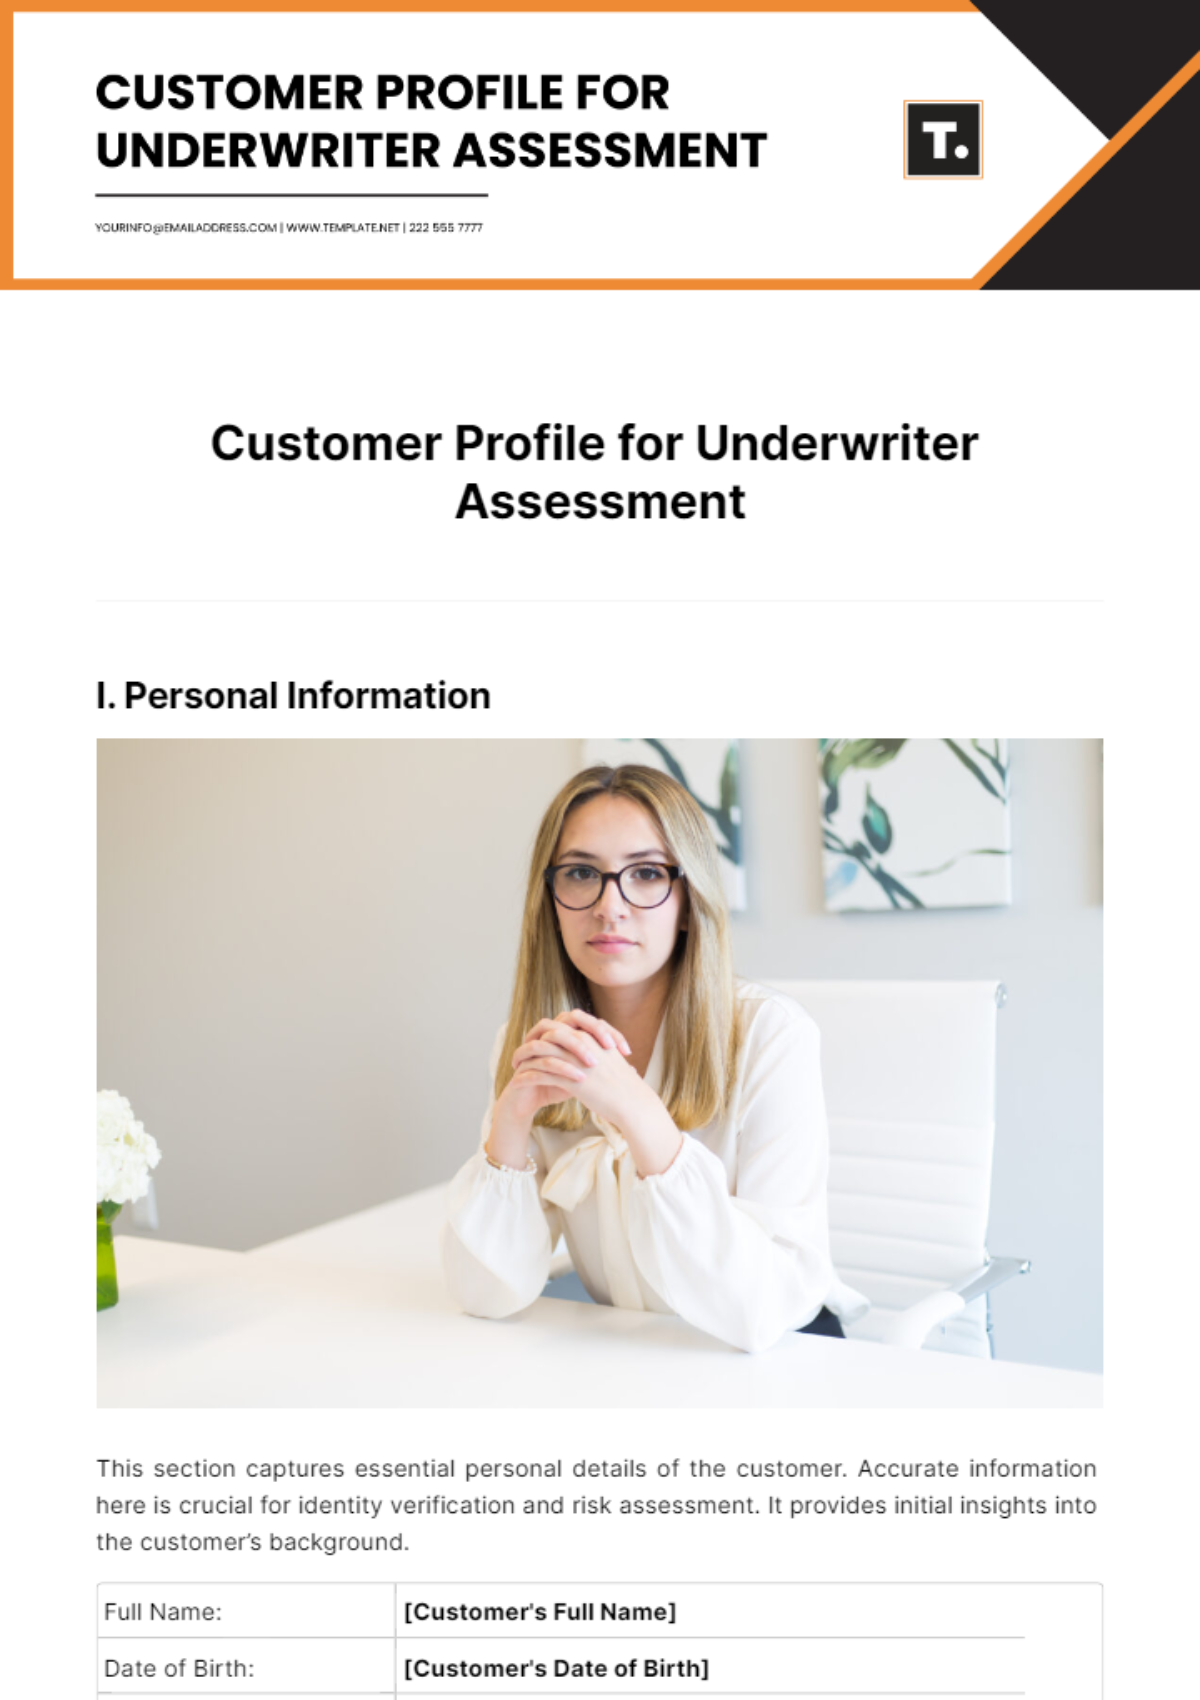 Customer Profile for Underwriter Assessment Template